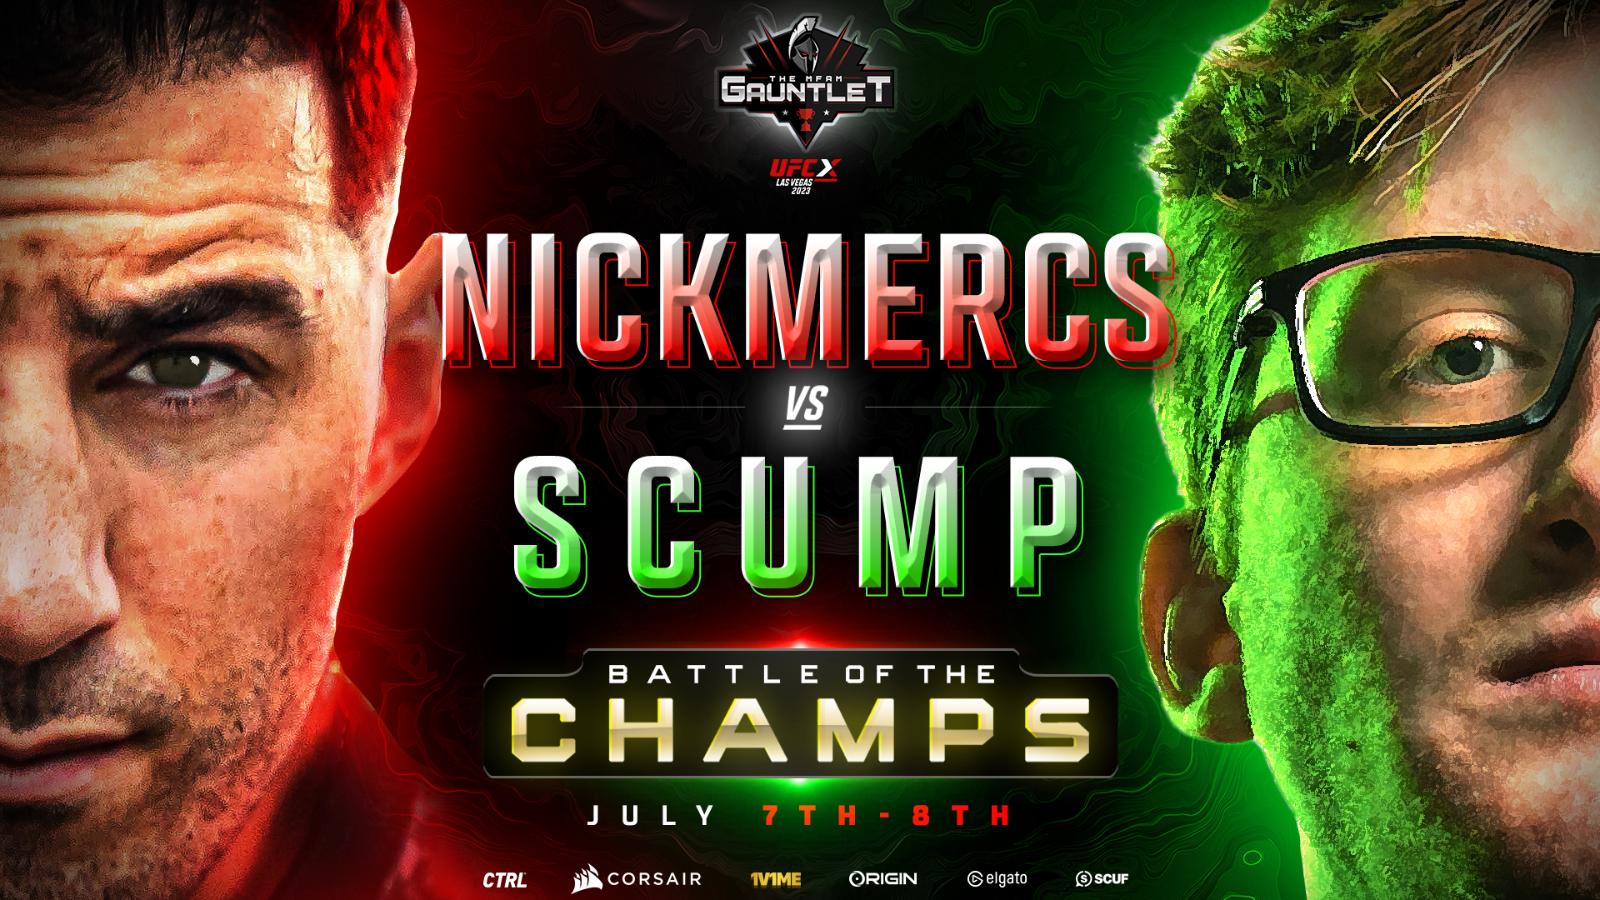 NICKMERCS vs Scump battle of the champs